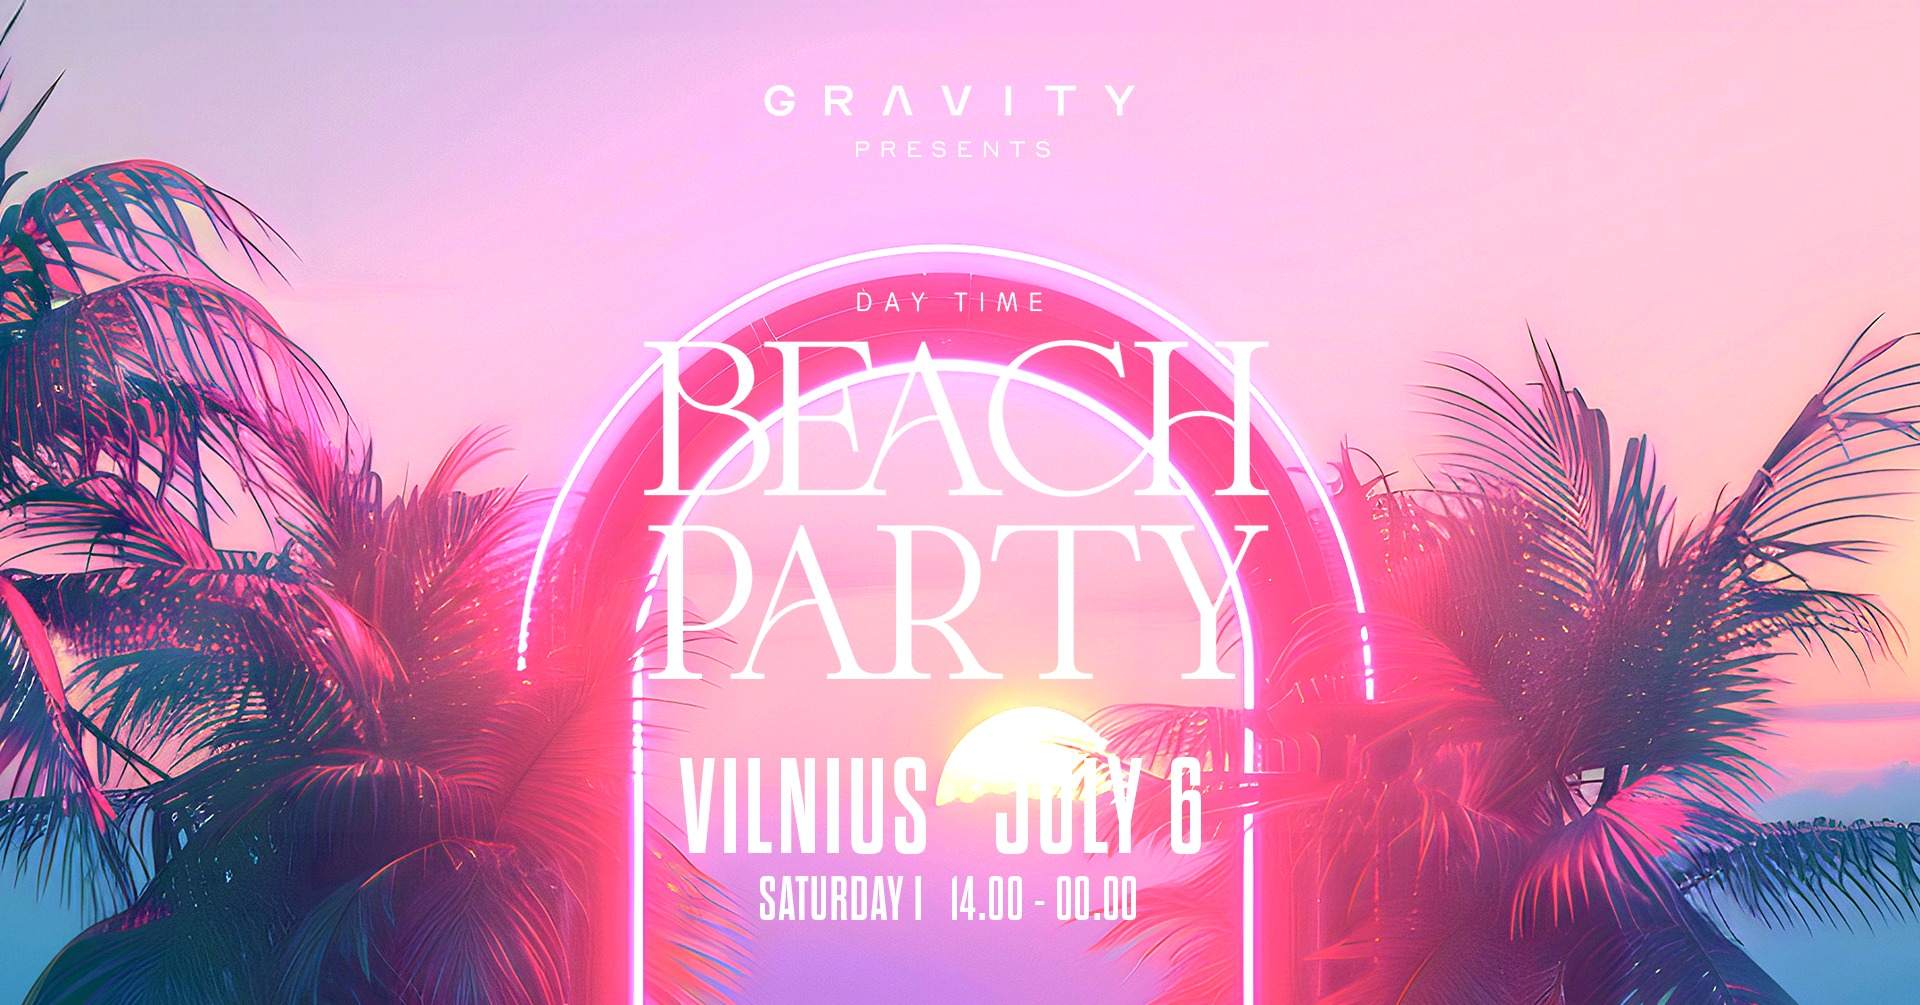 Beach Party Vilnius By Gravity VLN - フライヤー表